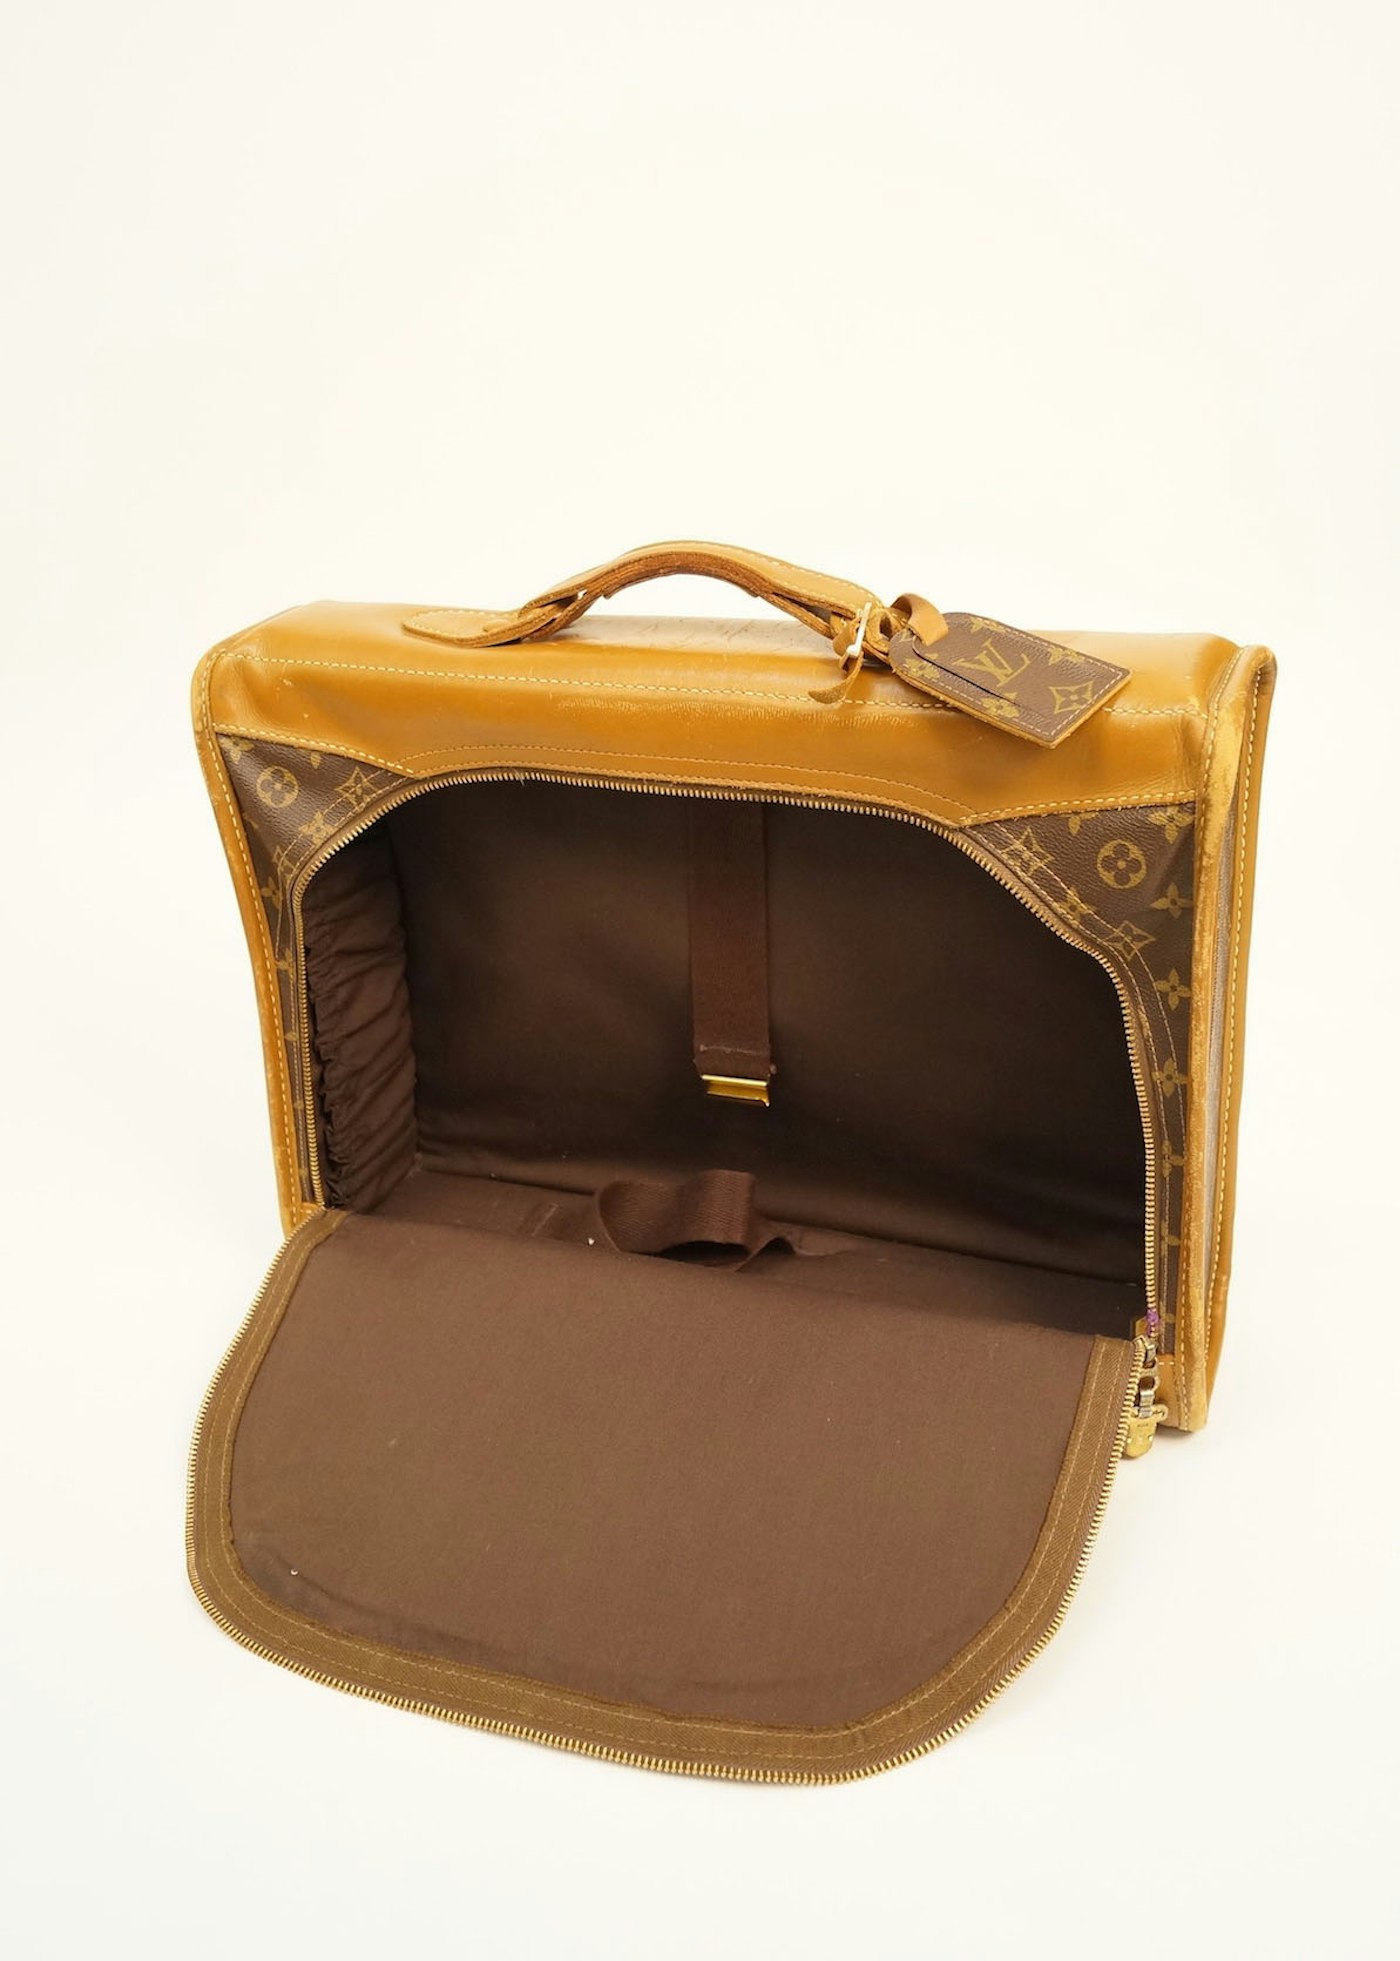 Antique Louis Vuitton suitcase red/white stripe - Pinth Vintage Luggage